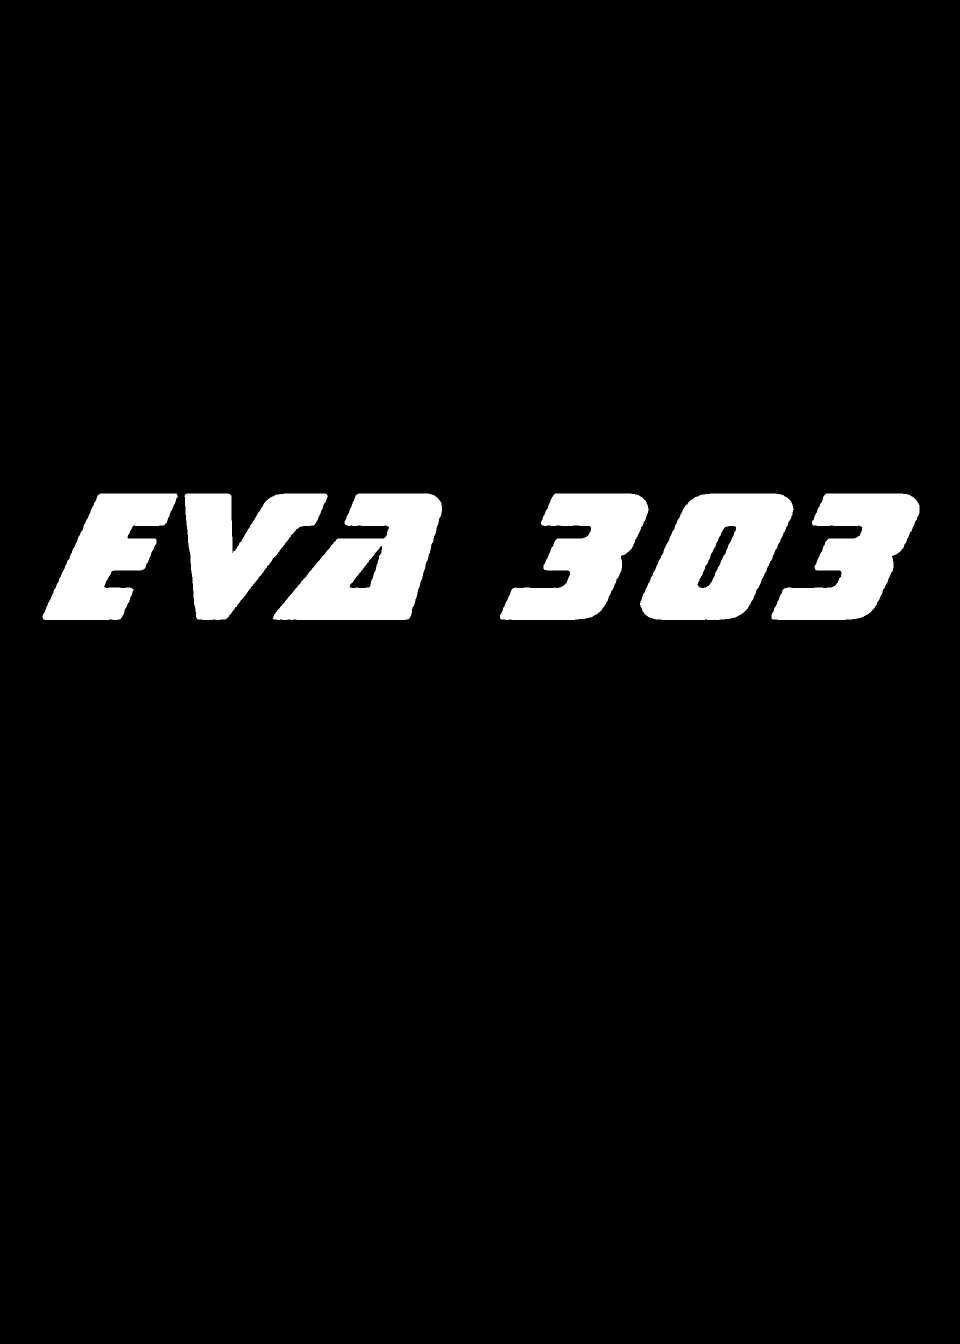 EVA-303 Chapter 13 0